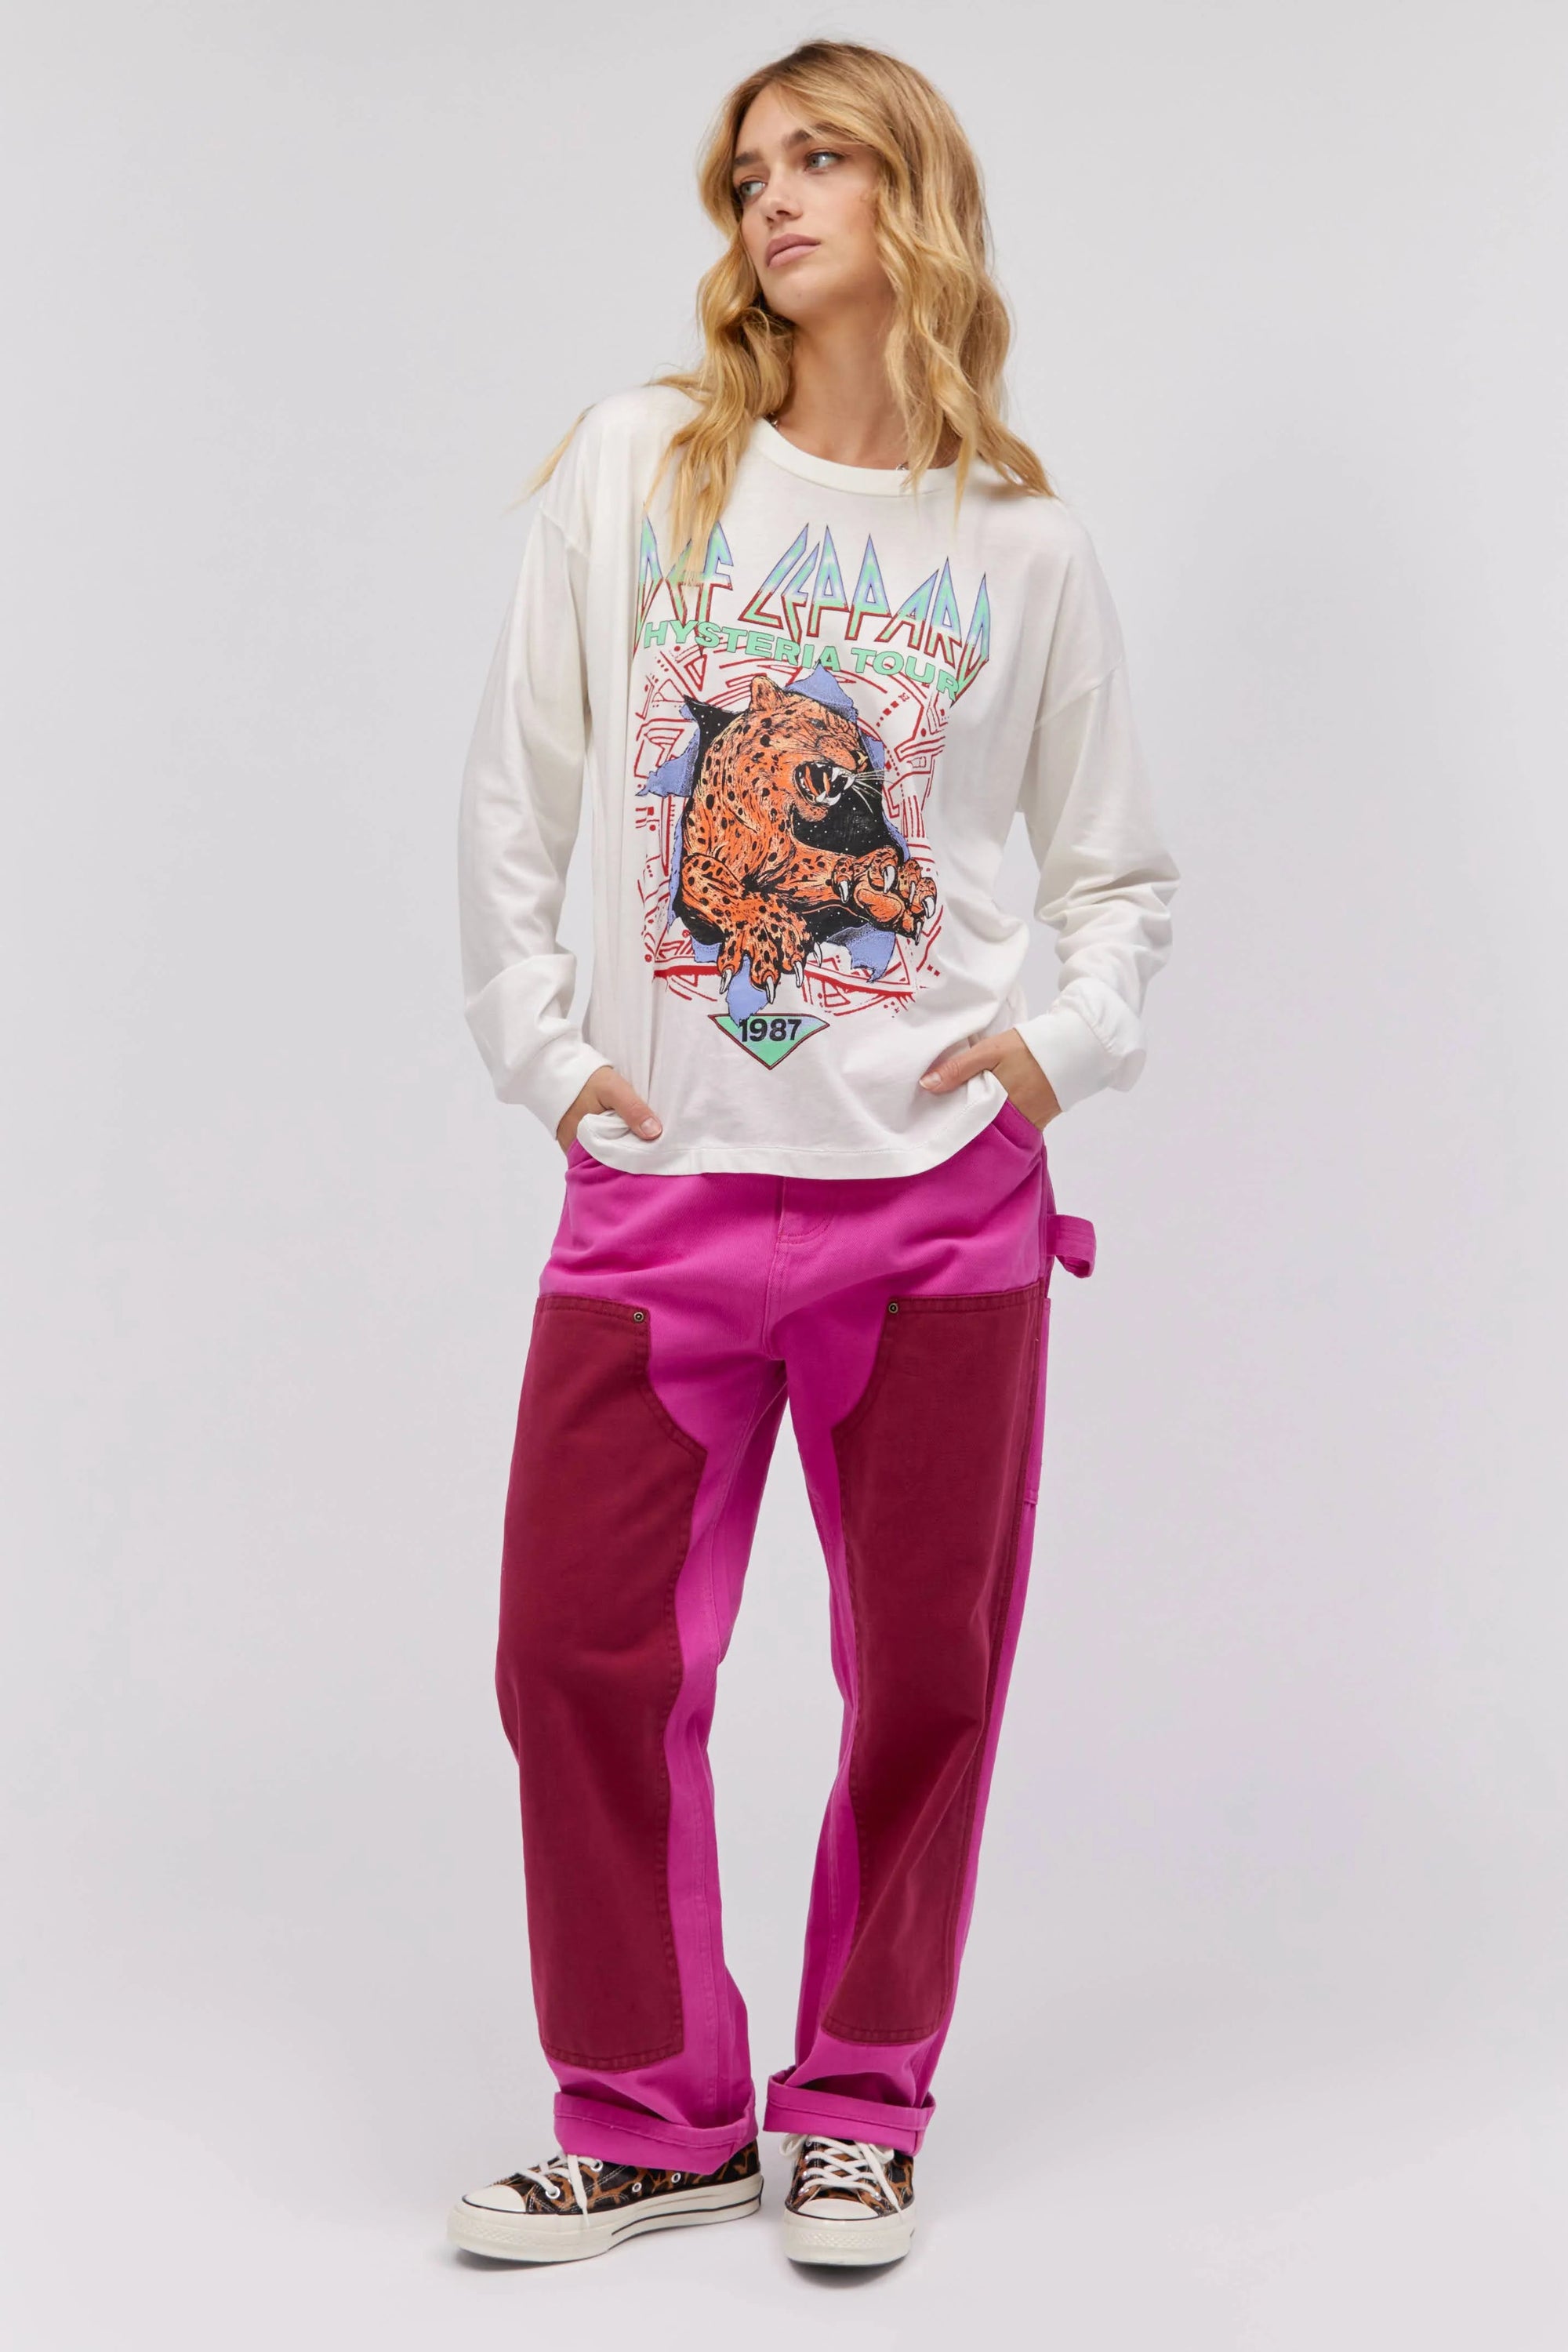 Daydreamer LA | Def Leppard Boyfriend Tee | Long Sleeve Merch Tee - Women's Shirts & Tops - Blooming Daily